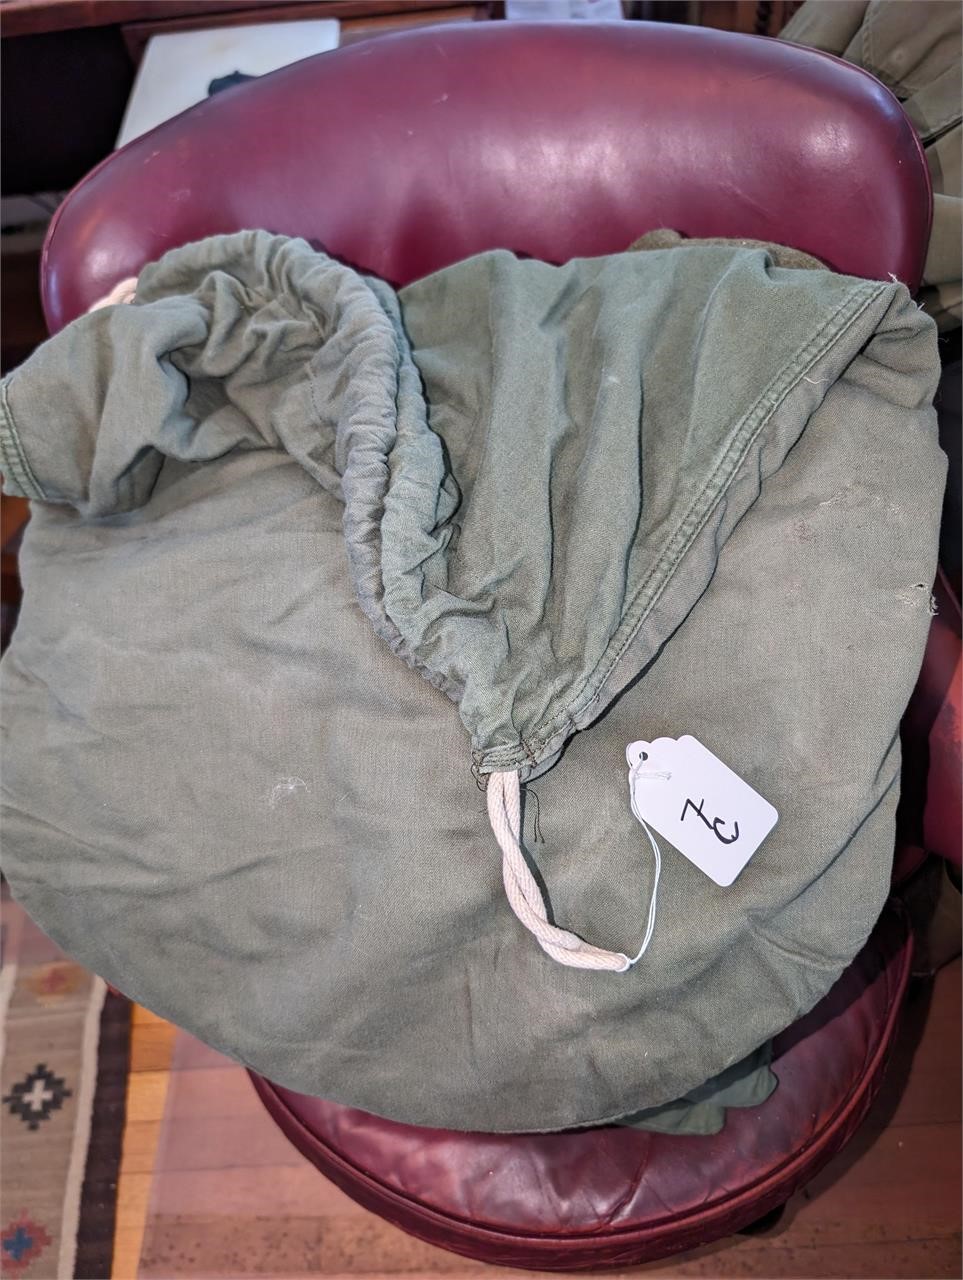 US Army Vietnam Era Laundry Bag